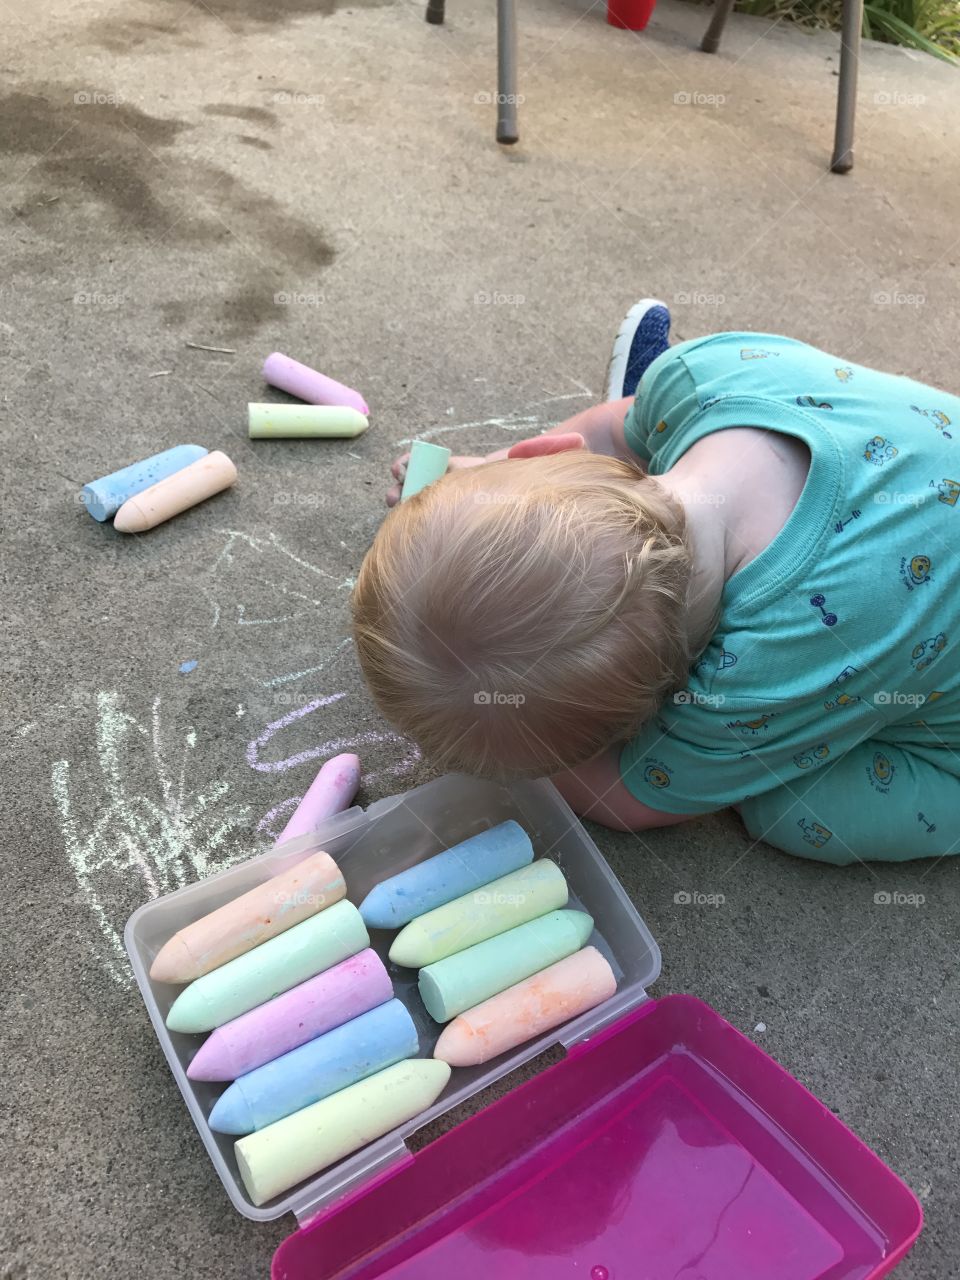 Chalk Baby